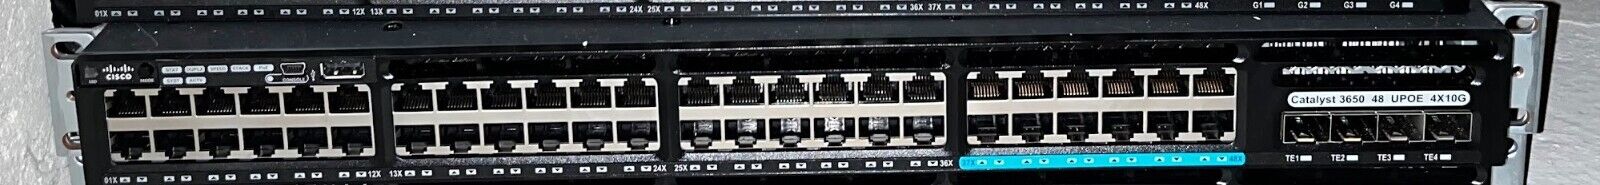 Cisco 3650 WS-C3650-12X48UQ-L 48 Ports UPOE 12+4 10GB w/ Dual Power Supply